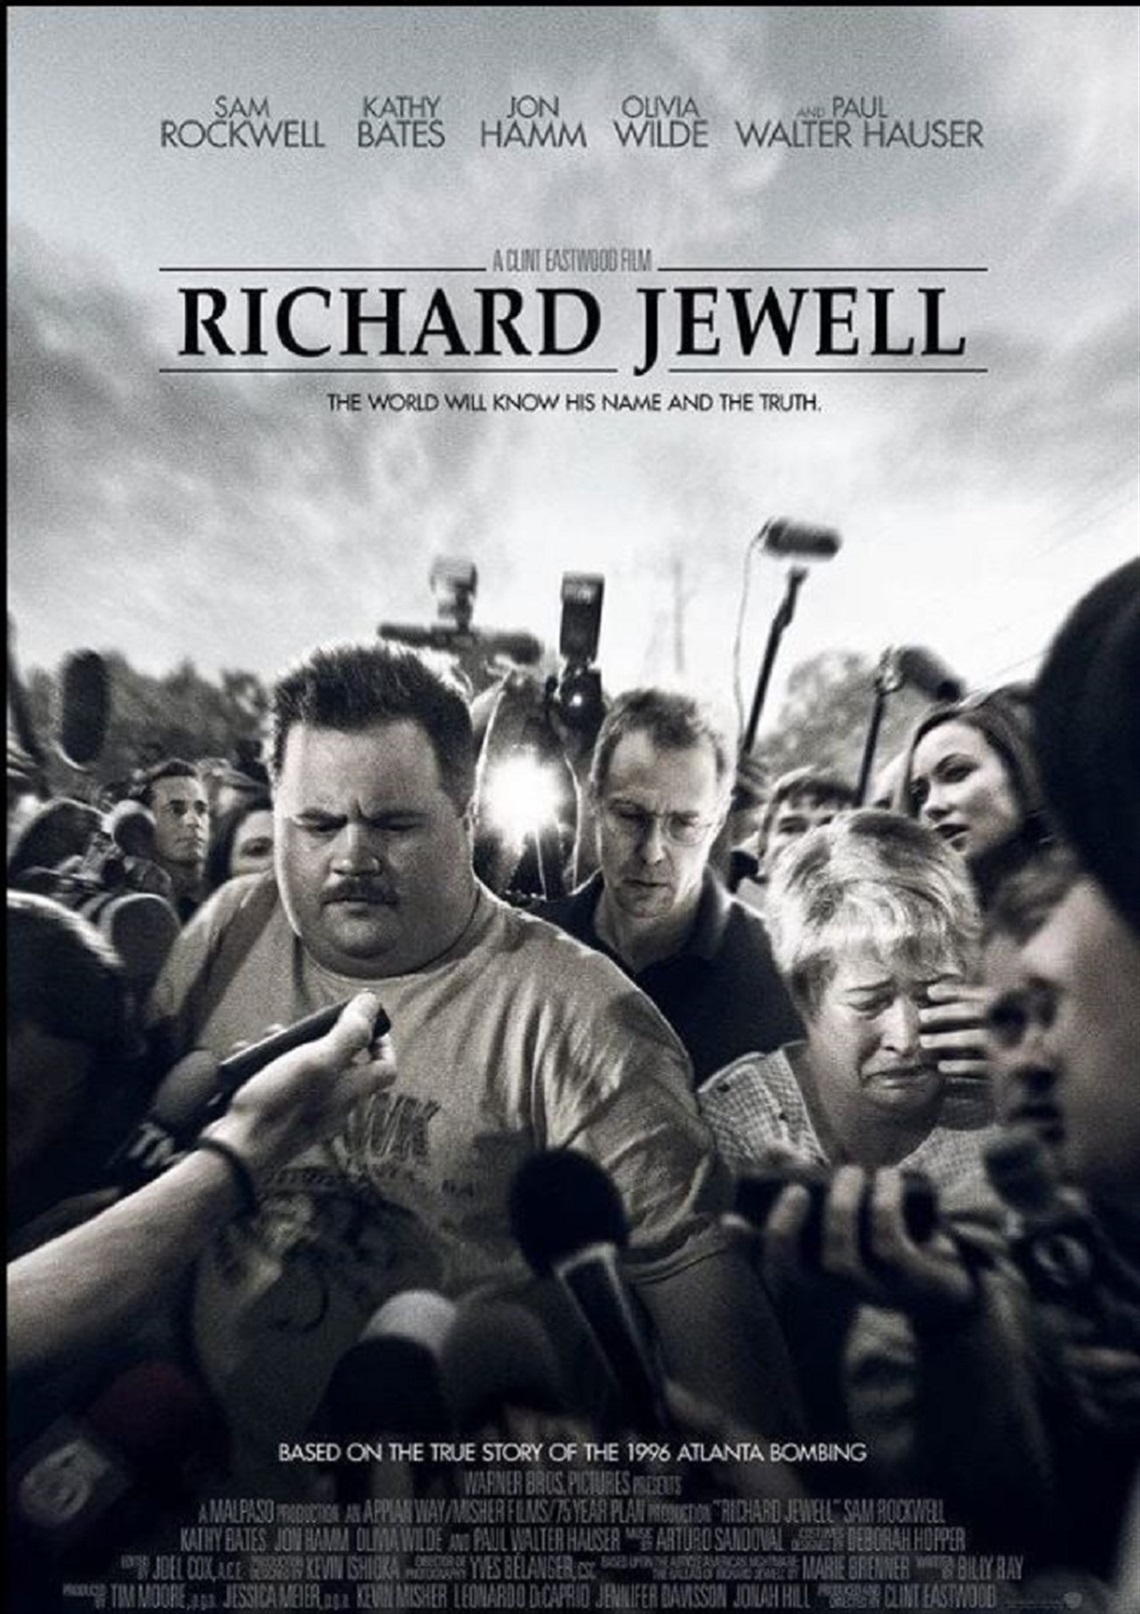 richard jewell movie poster.JPG